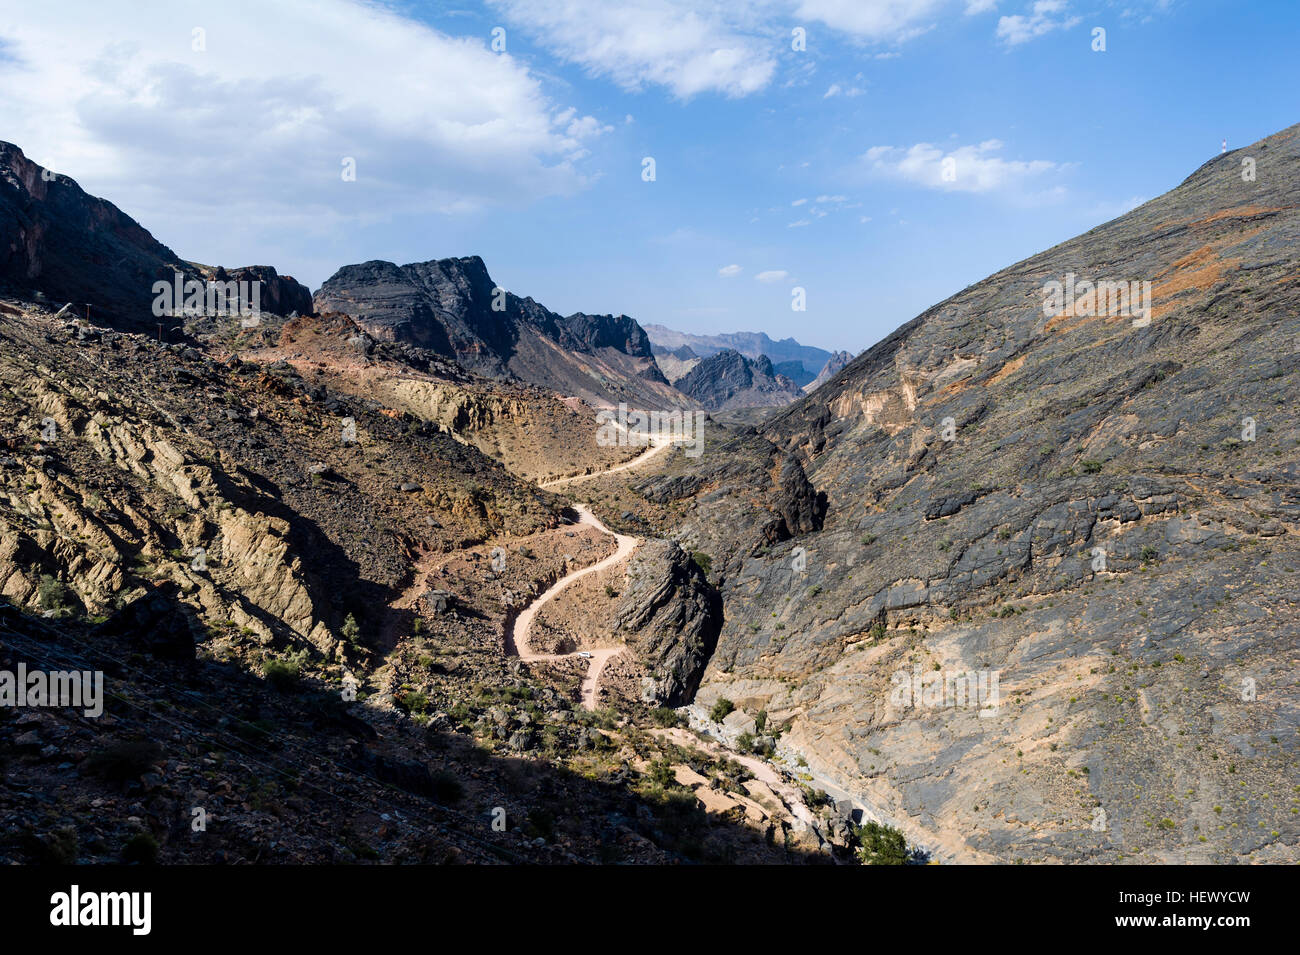 A winding dirt road meanders through a desert mountain pass. Stock Photo